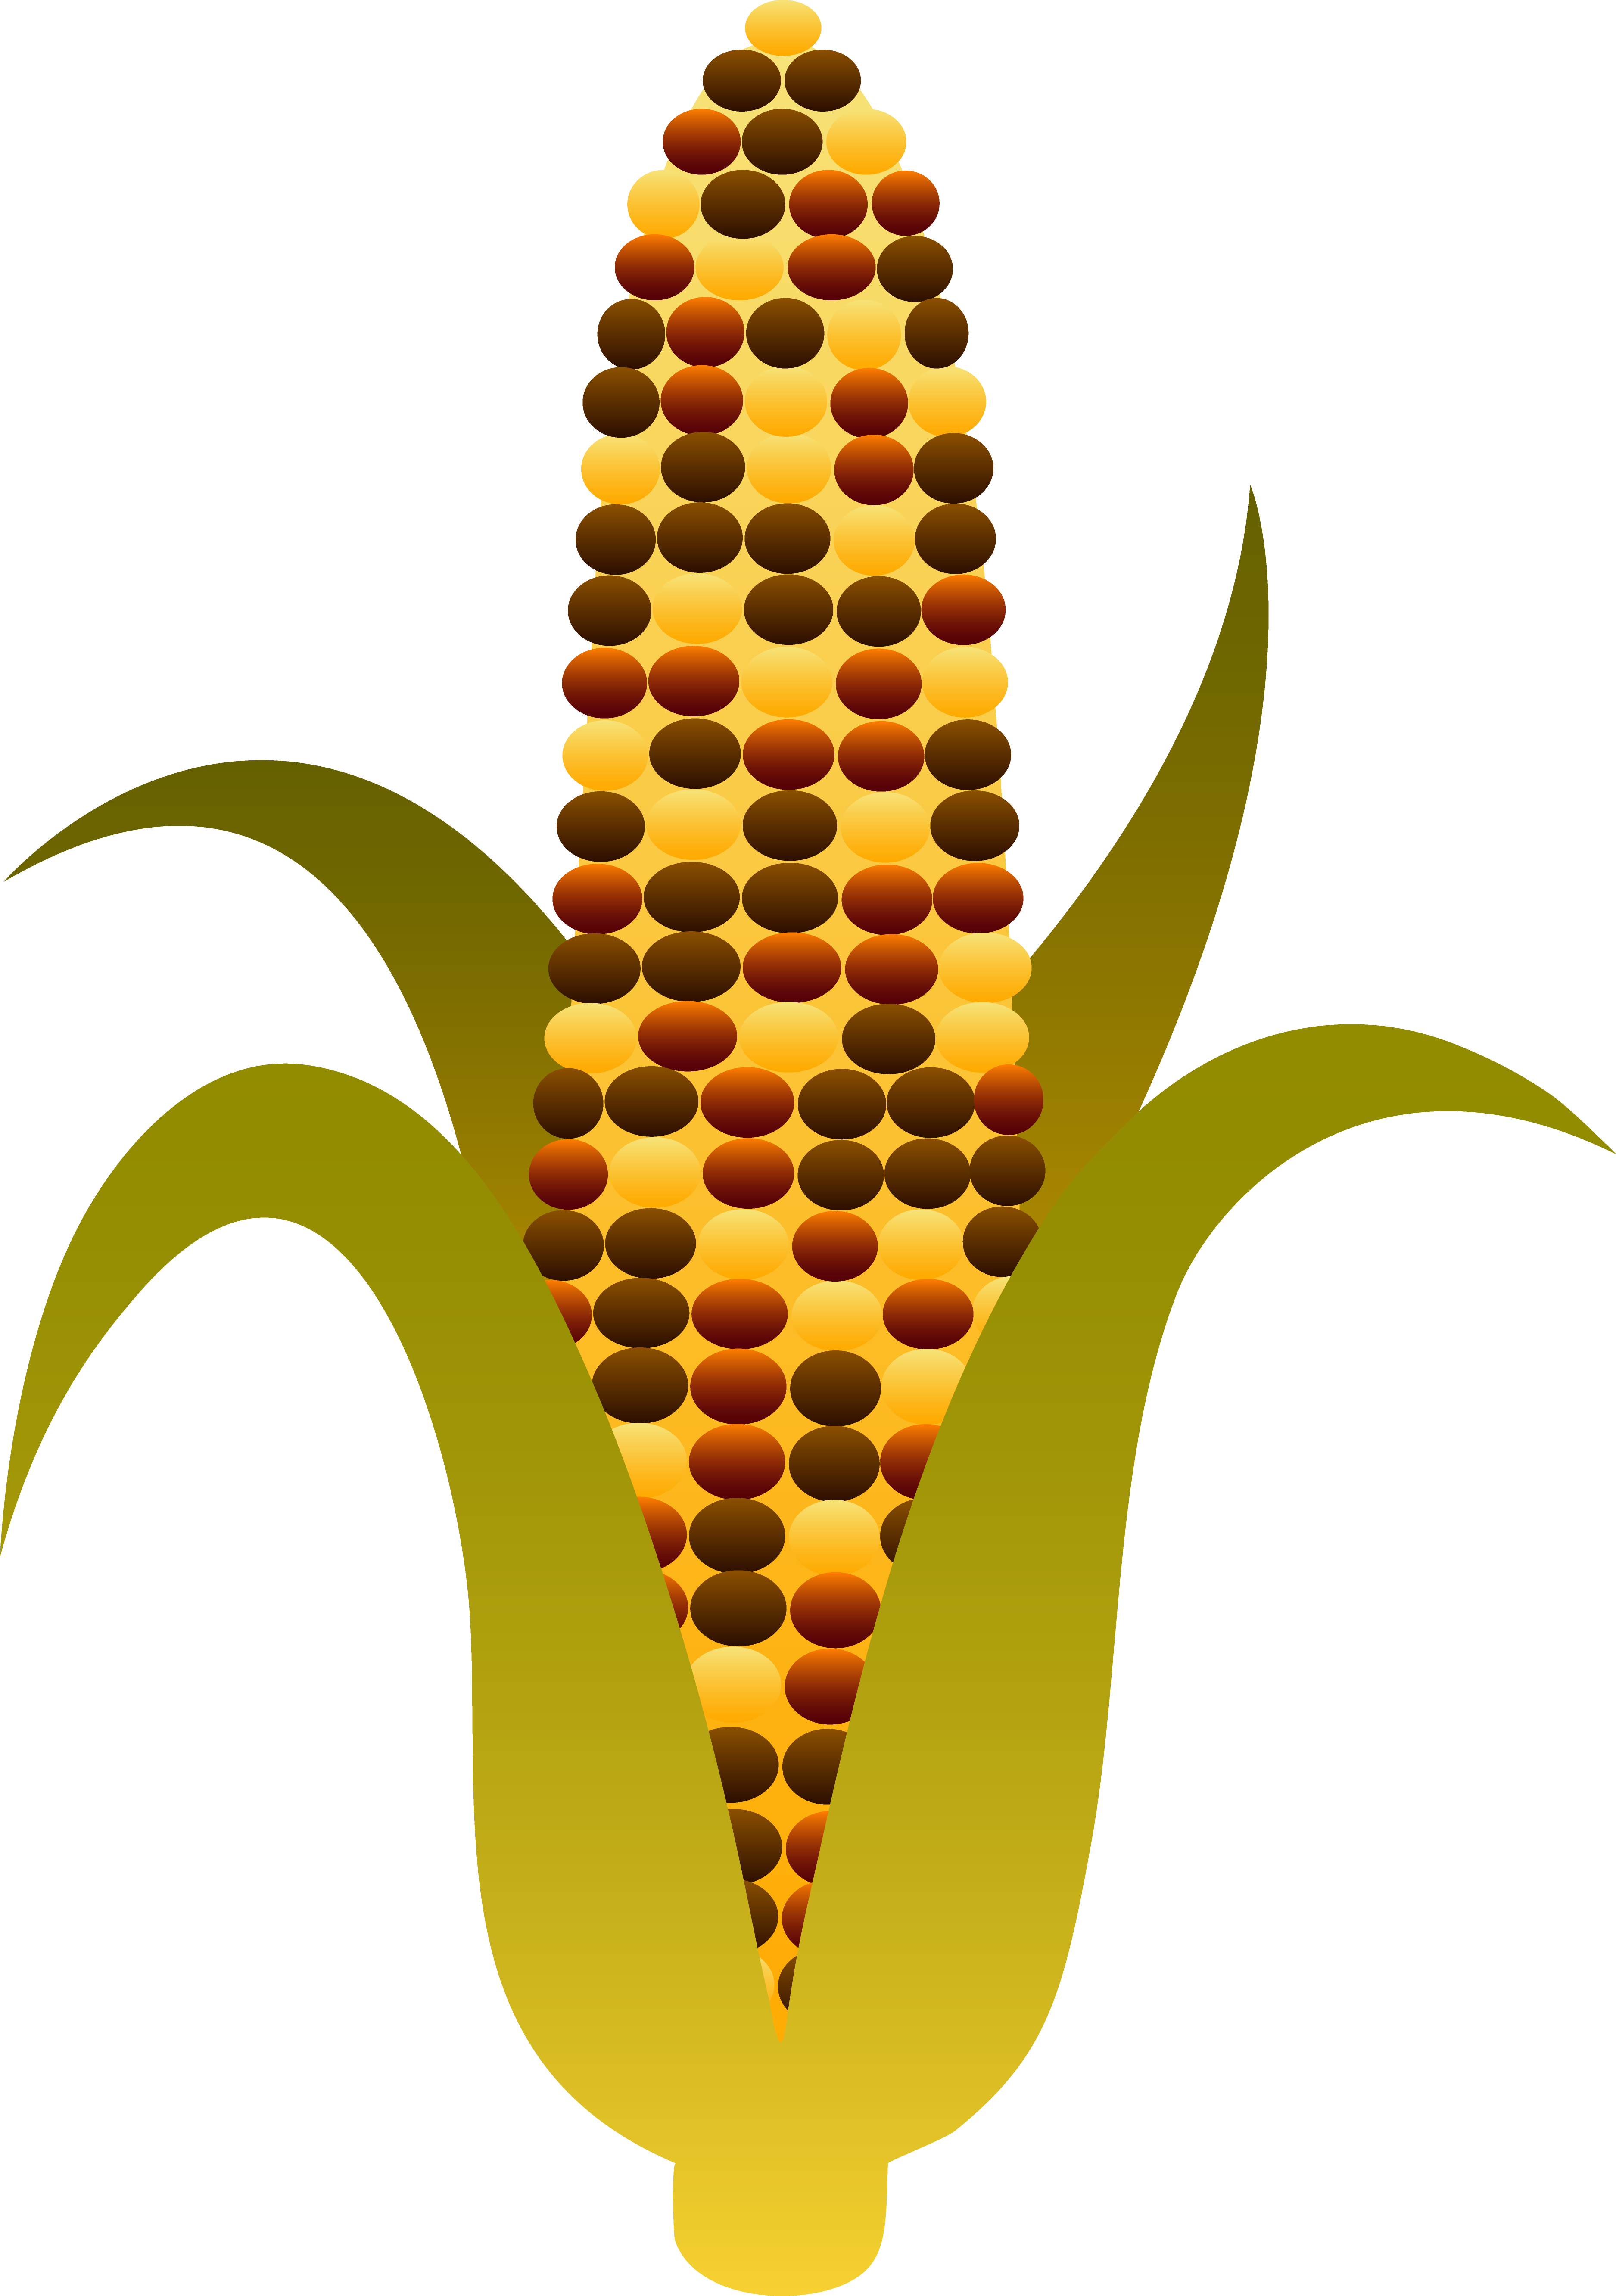 Harvest corn maize free. Indian clipart hat